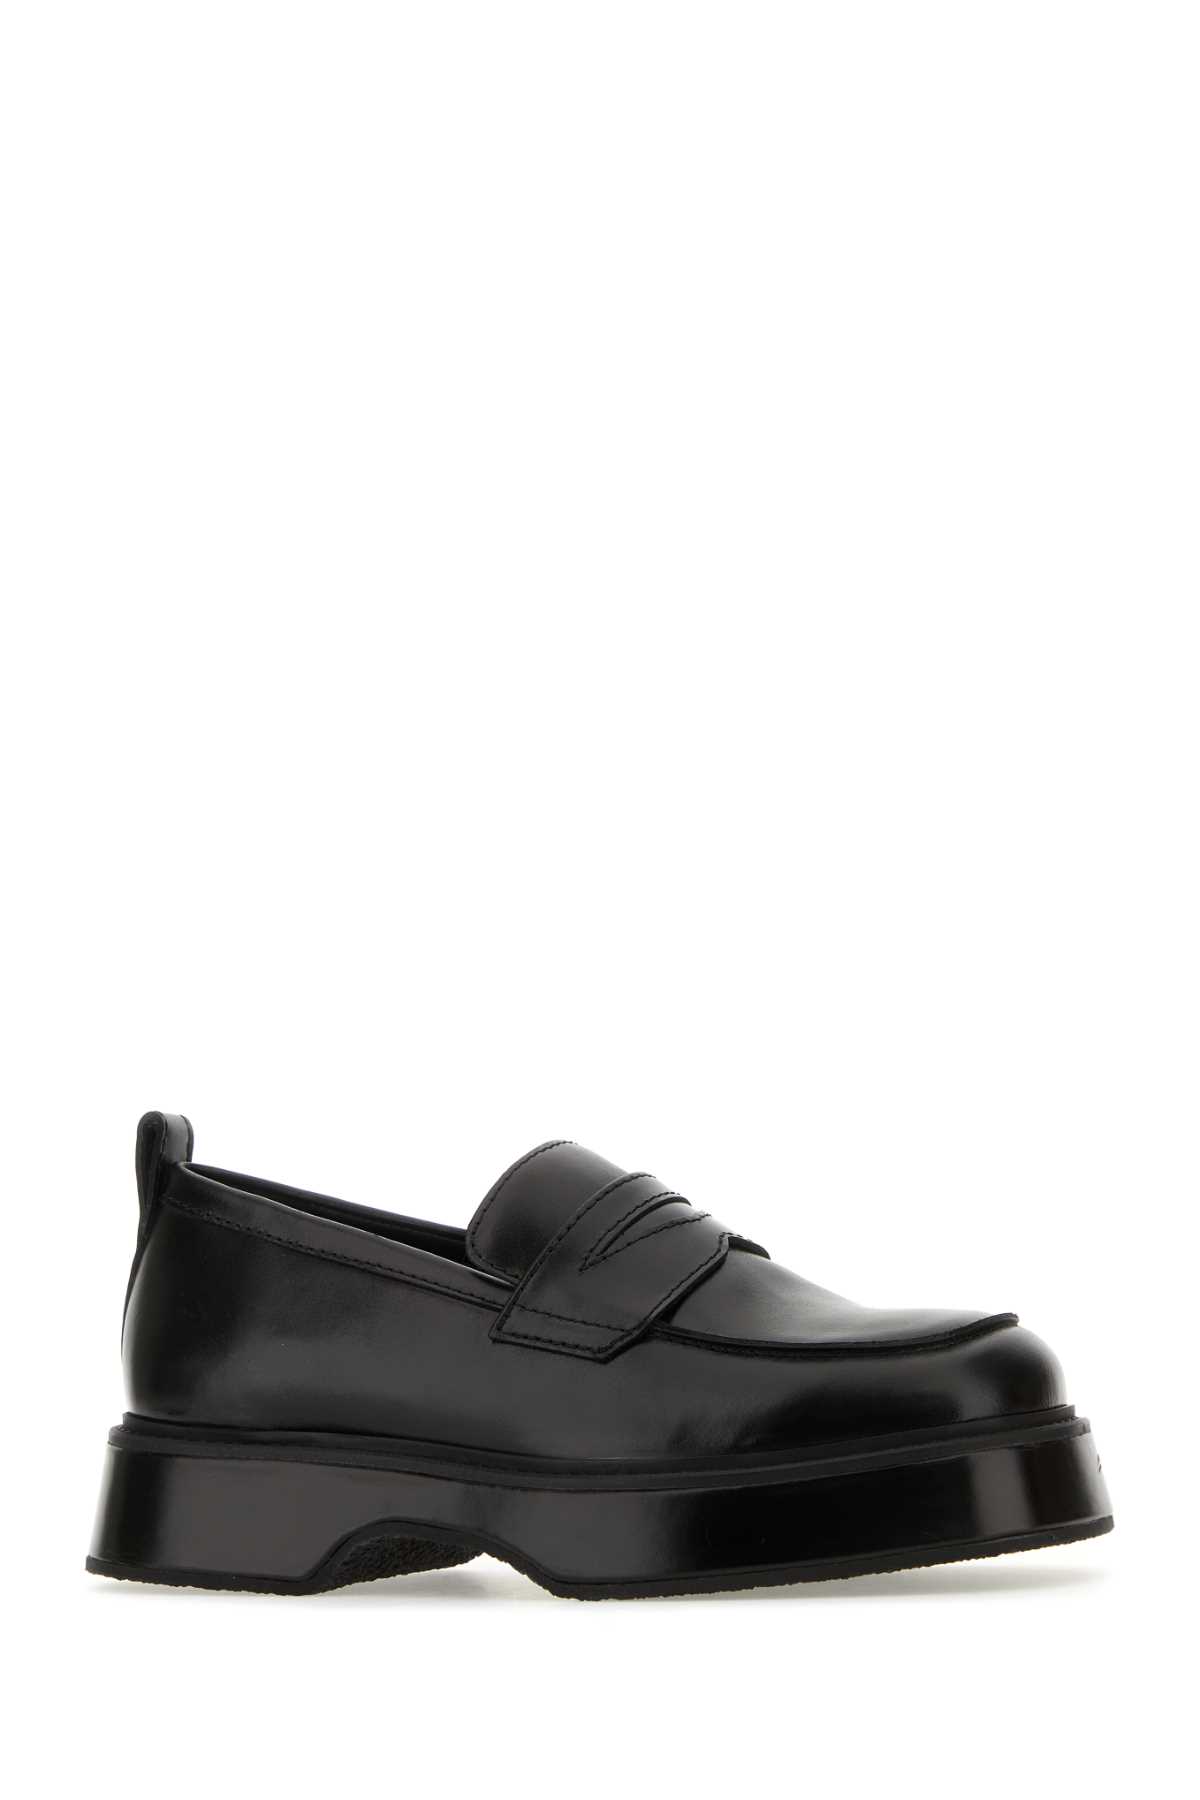 Shop Ami Alexandre Mattiussi Black Leather Loafers